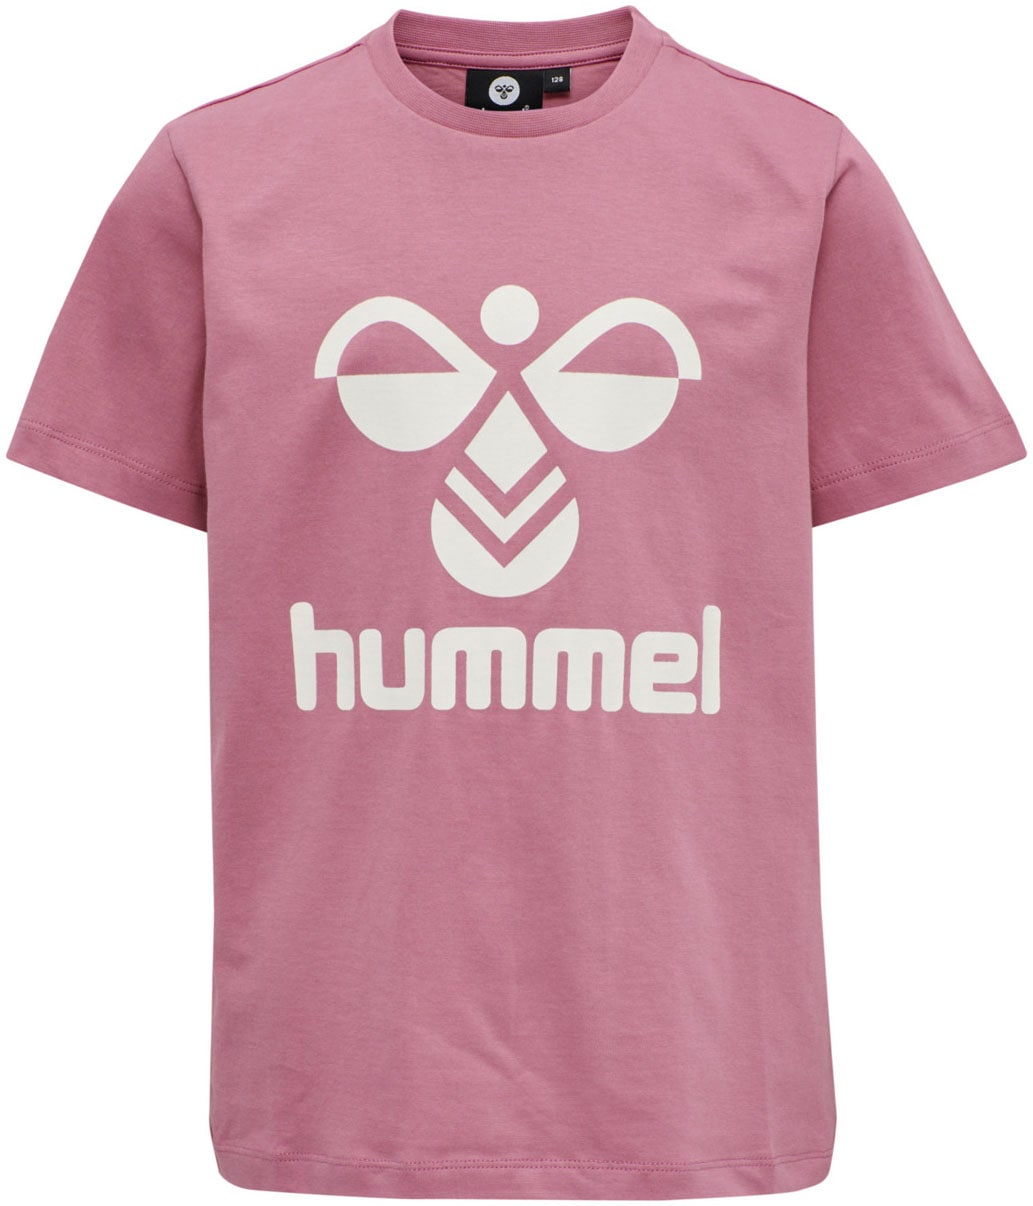 - »HMLTRES BAUR | Sleeve hummel Short (1 T-SHIRT T-Shirt Kinder«, tlg.) bestellen für